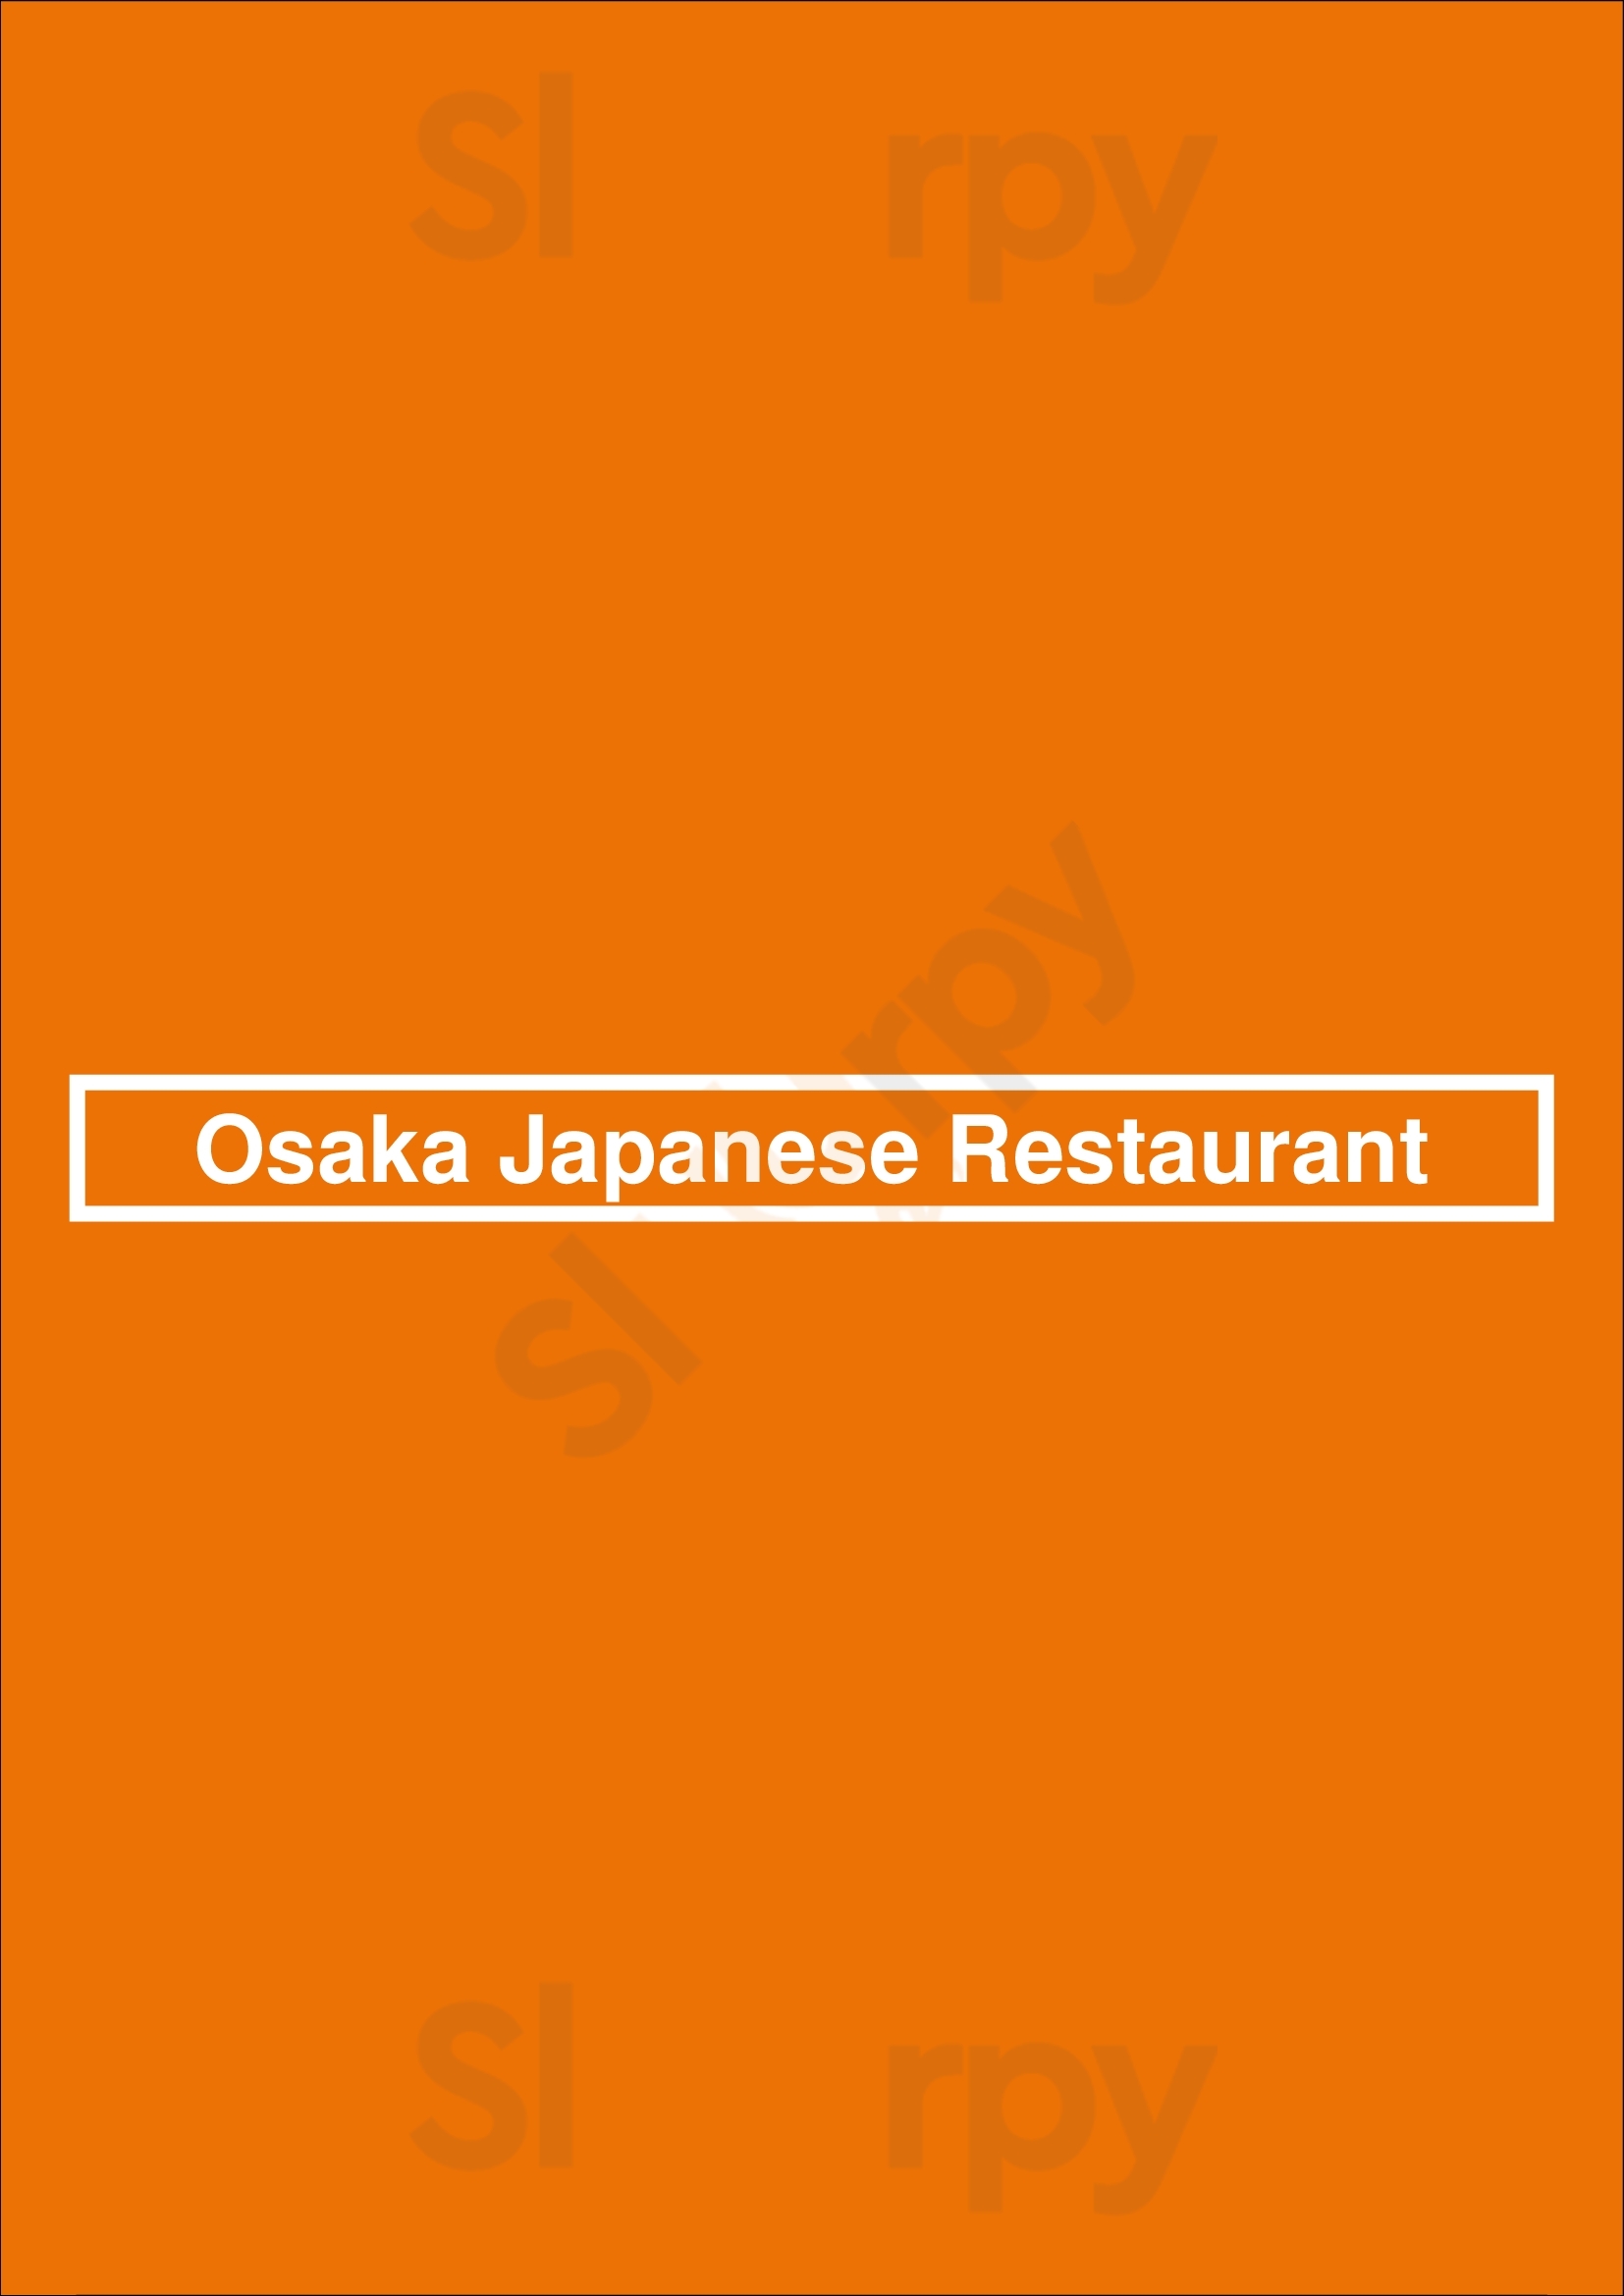 Osaka Japanese Restaurant Columbia Menu - 1